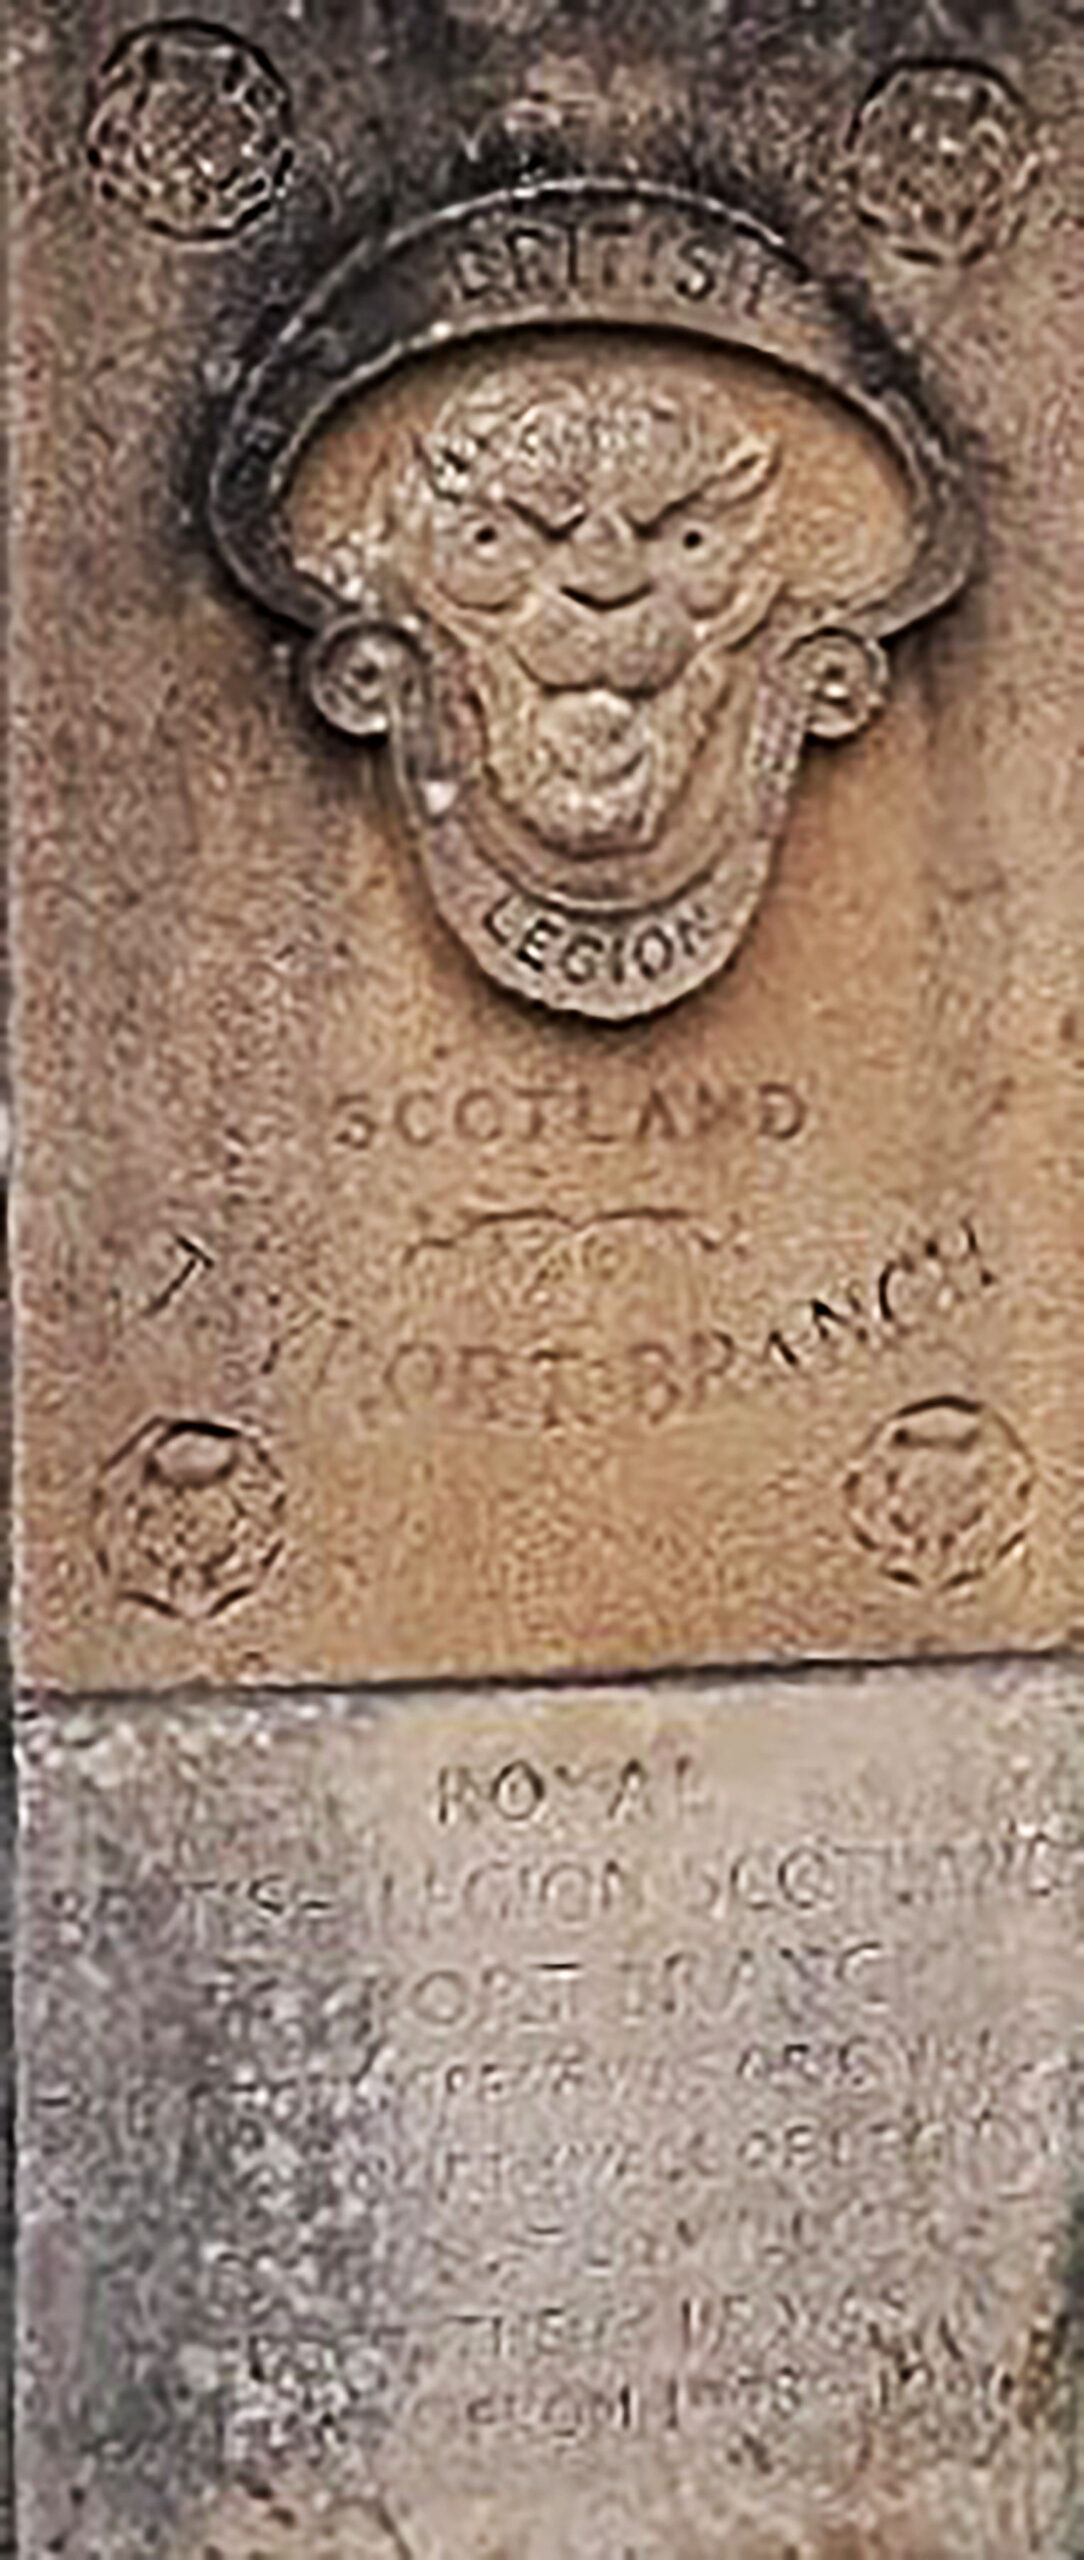 Tayport Heritage Trail - Board 9 - Royal British Legion emblem from their former premises in William Street